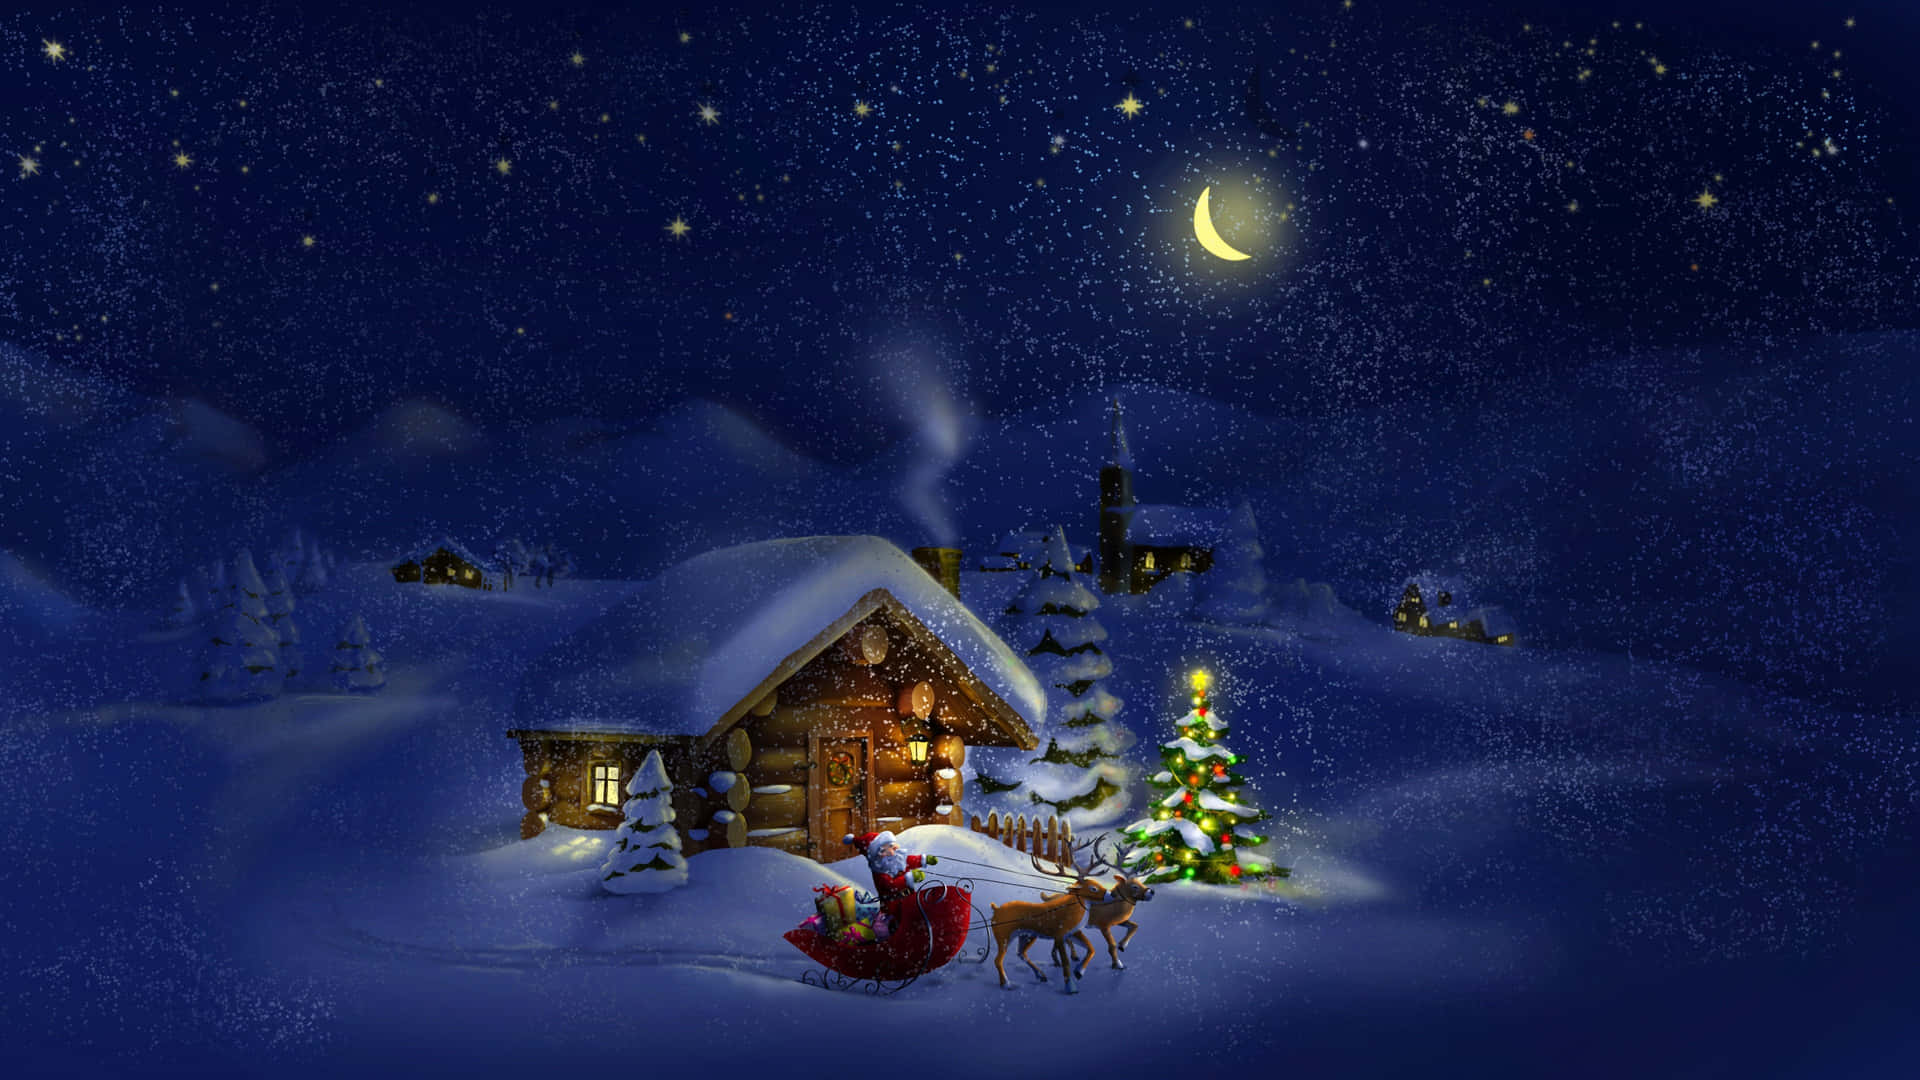 Cool Christmas Santa Claus Sleigh And Reindeer Wallpaper